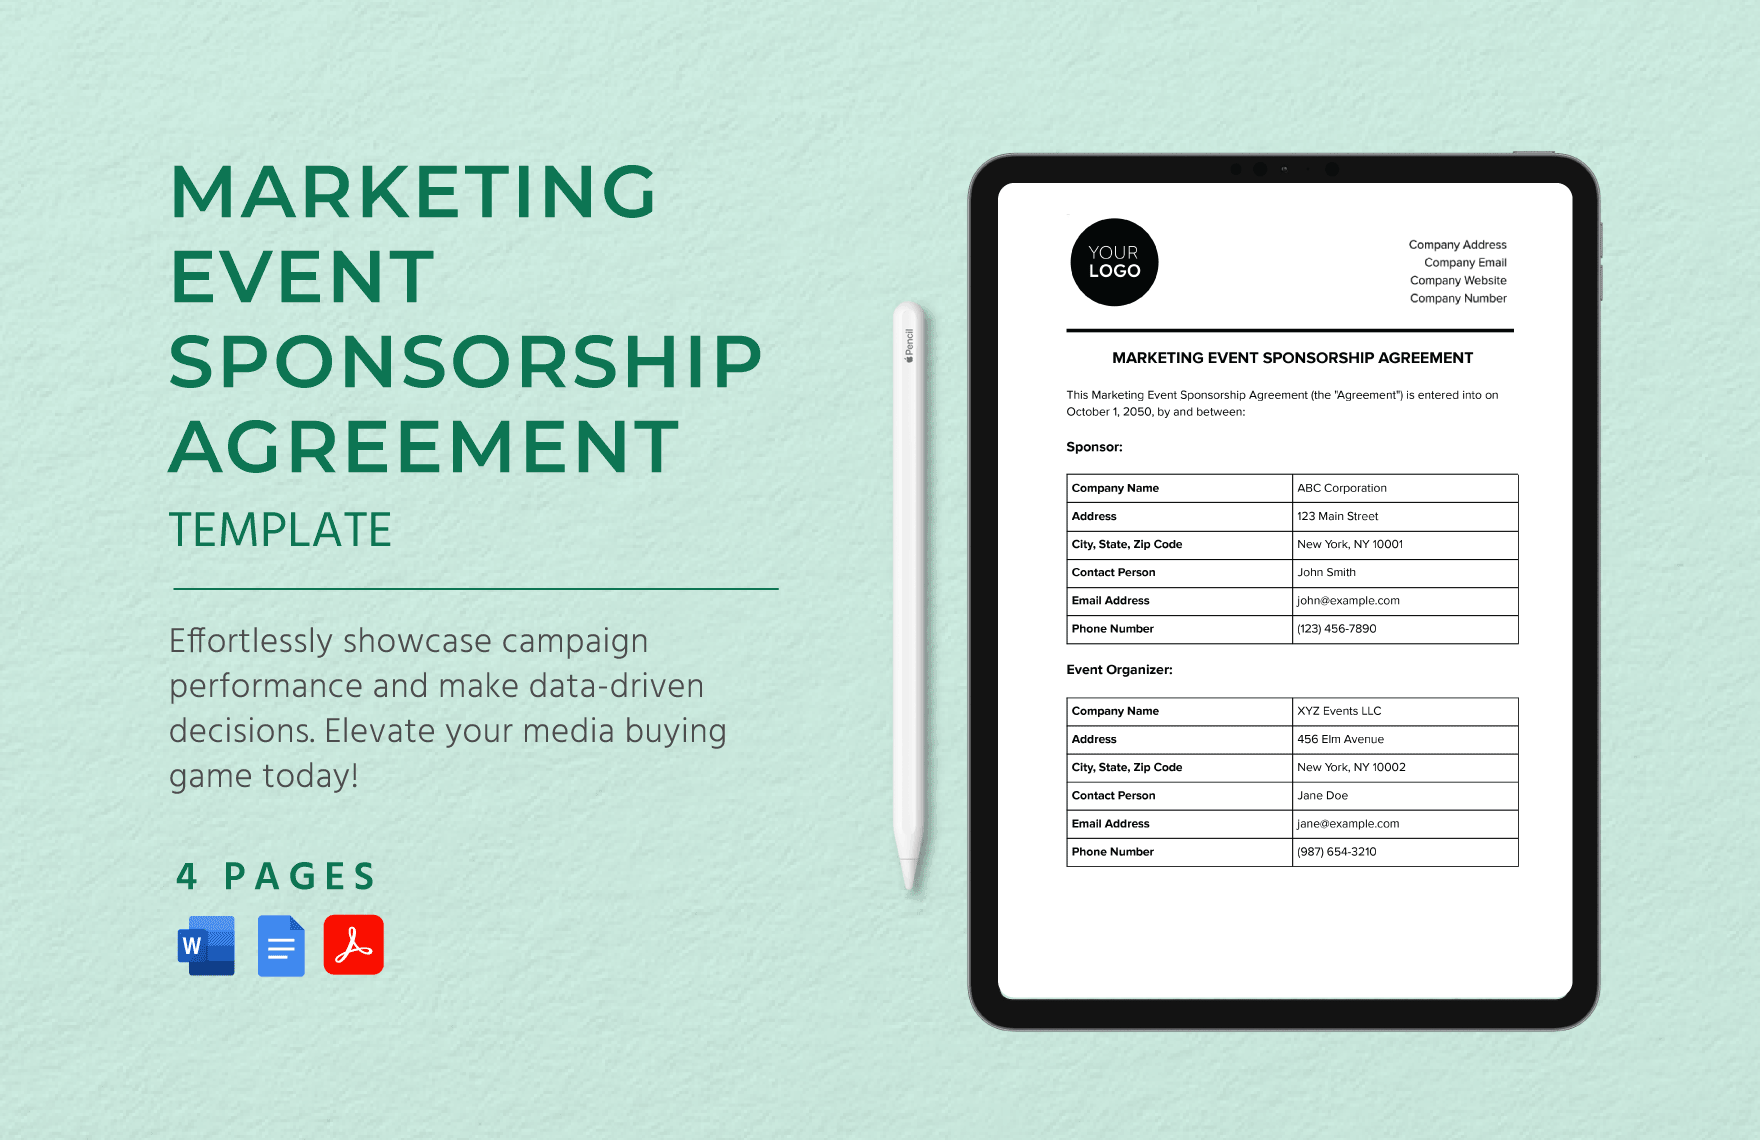 Marketing Event Sponsorship Agreement Template in Word, Google Docs, PDF